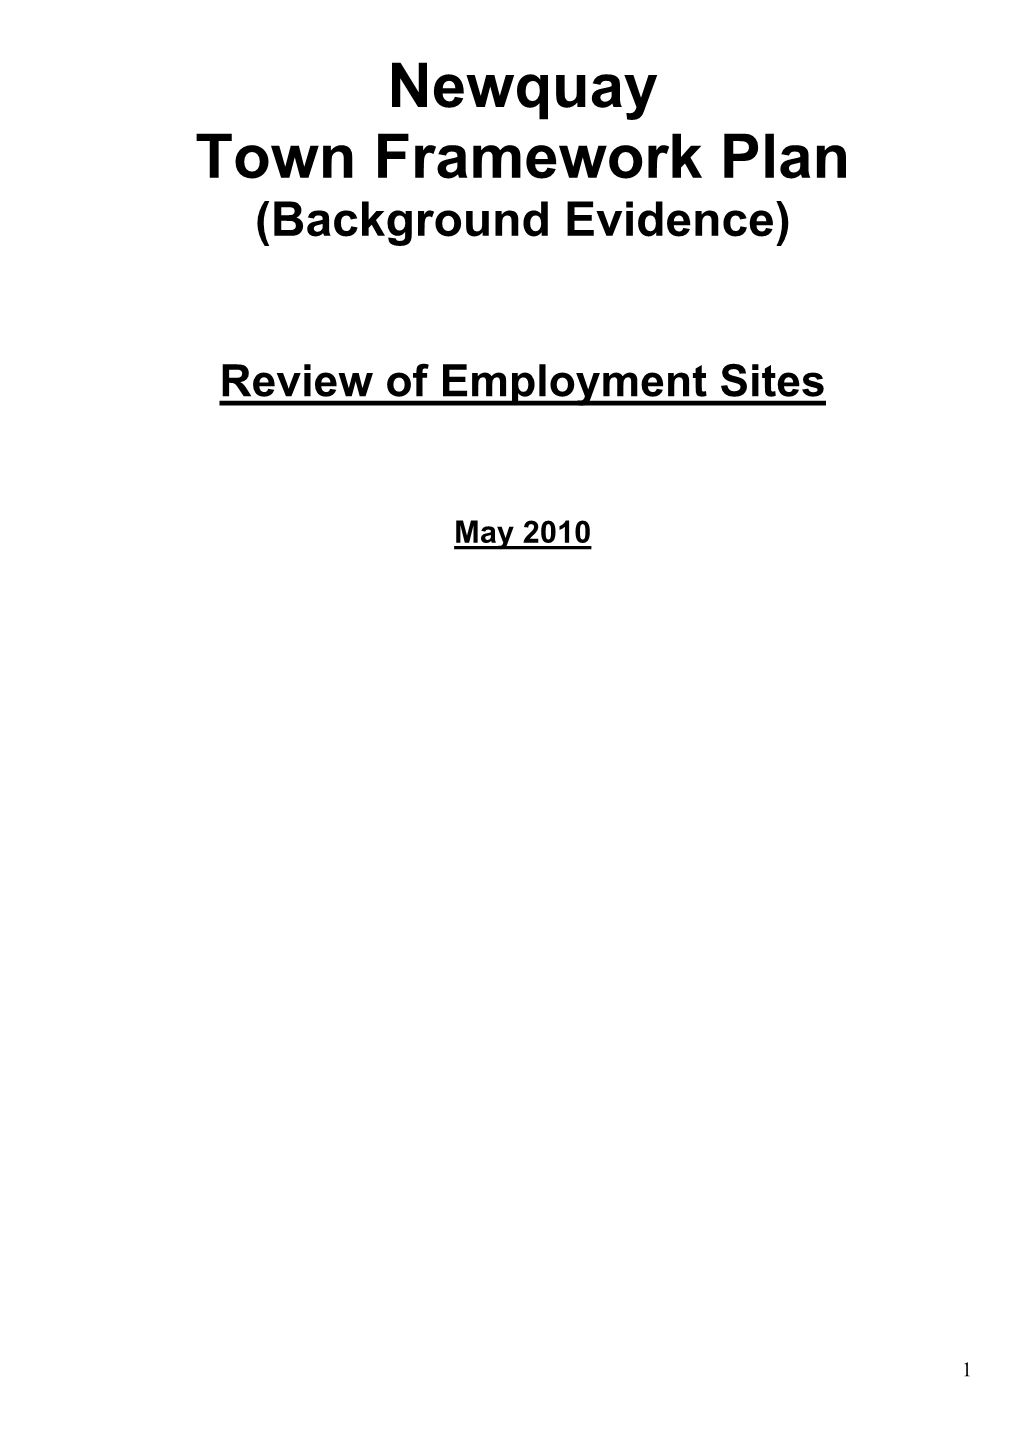 Newquay Town Framework Plan (Background Evidence)